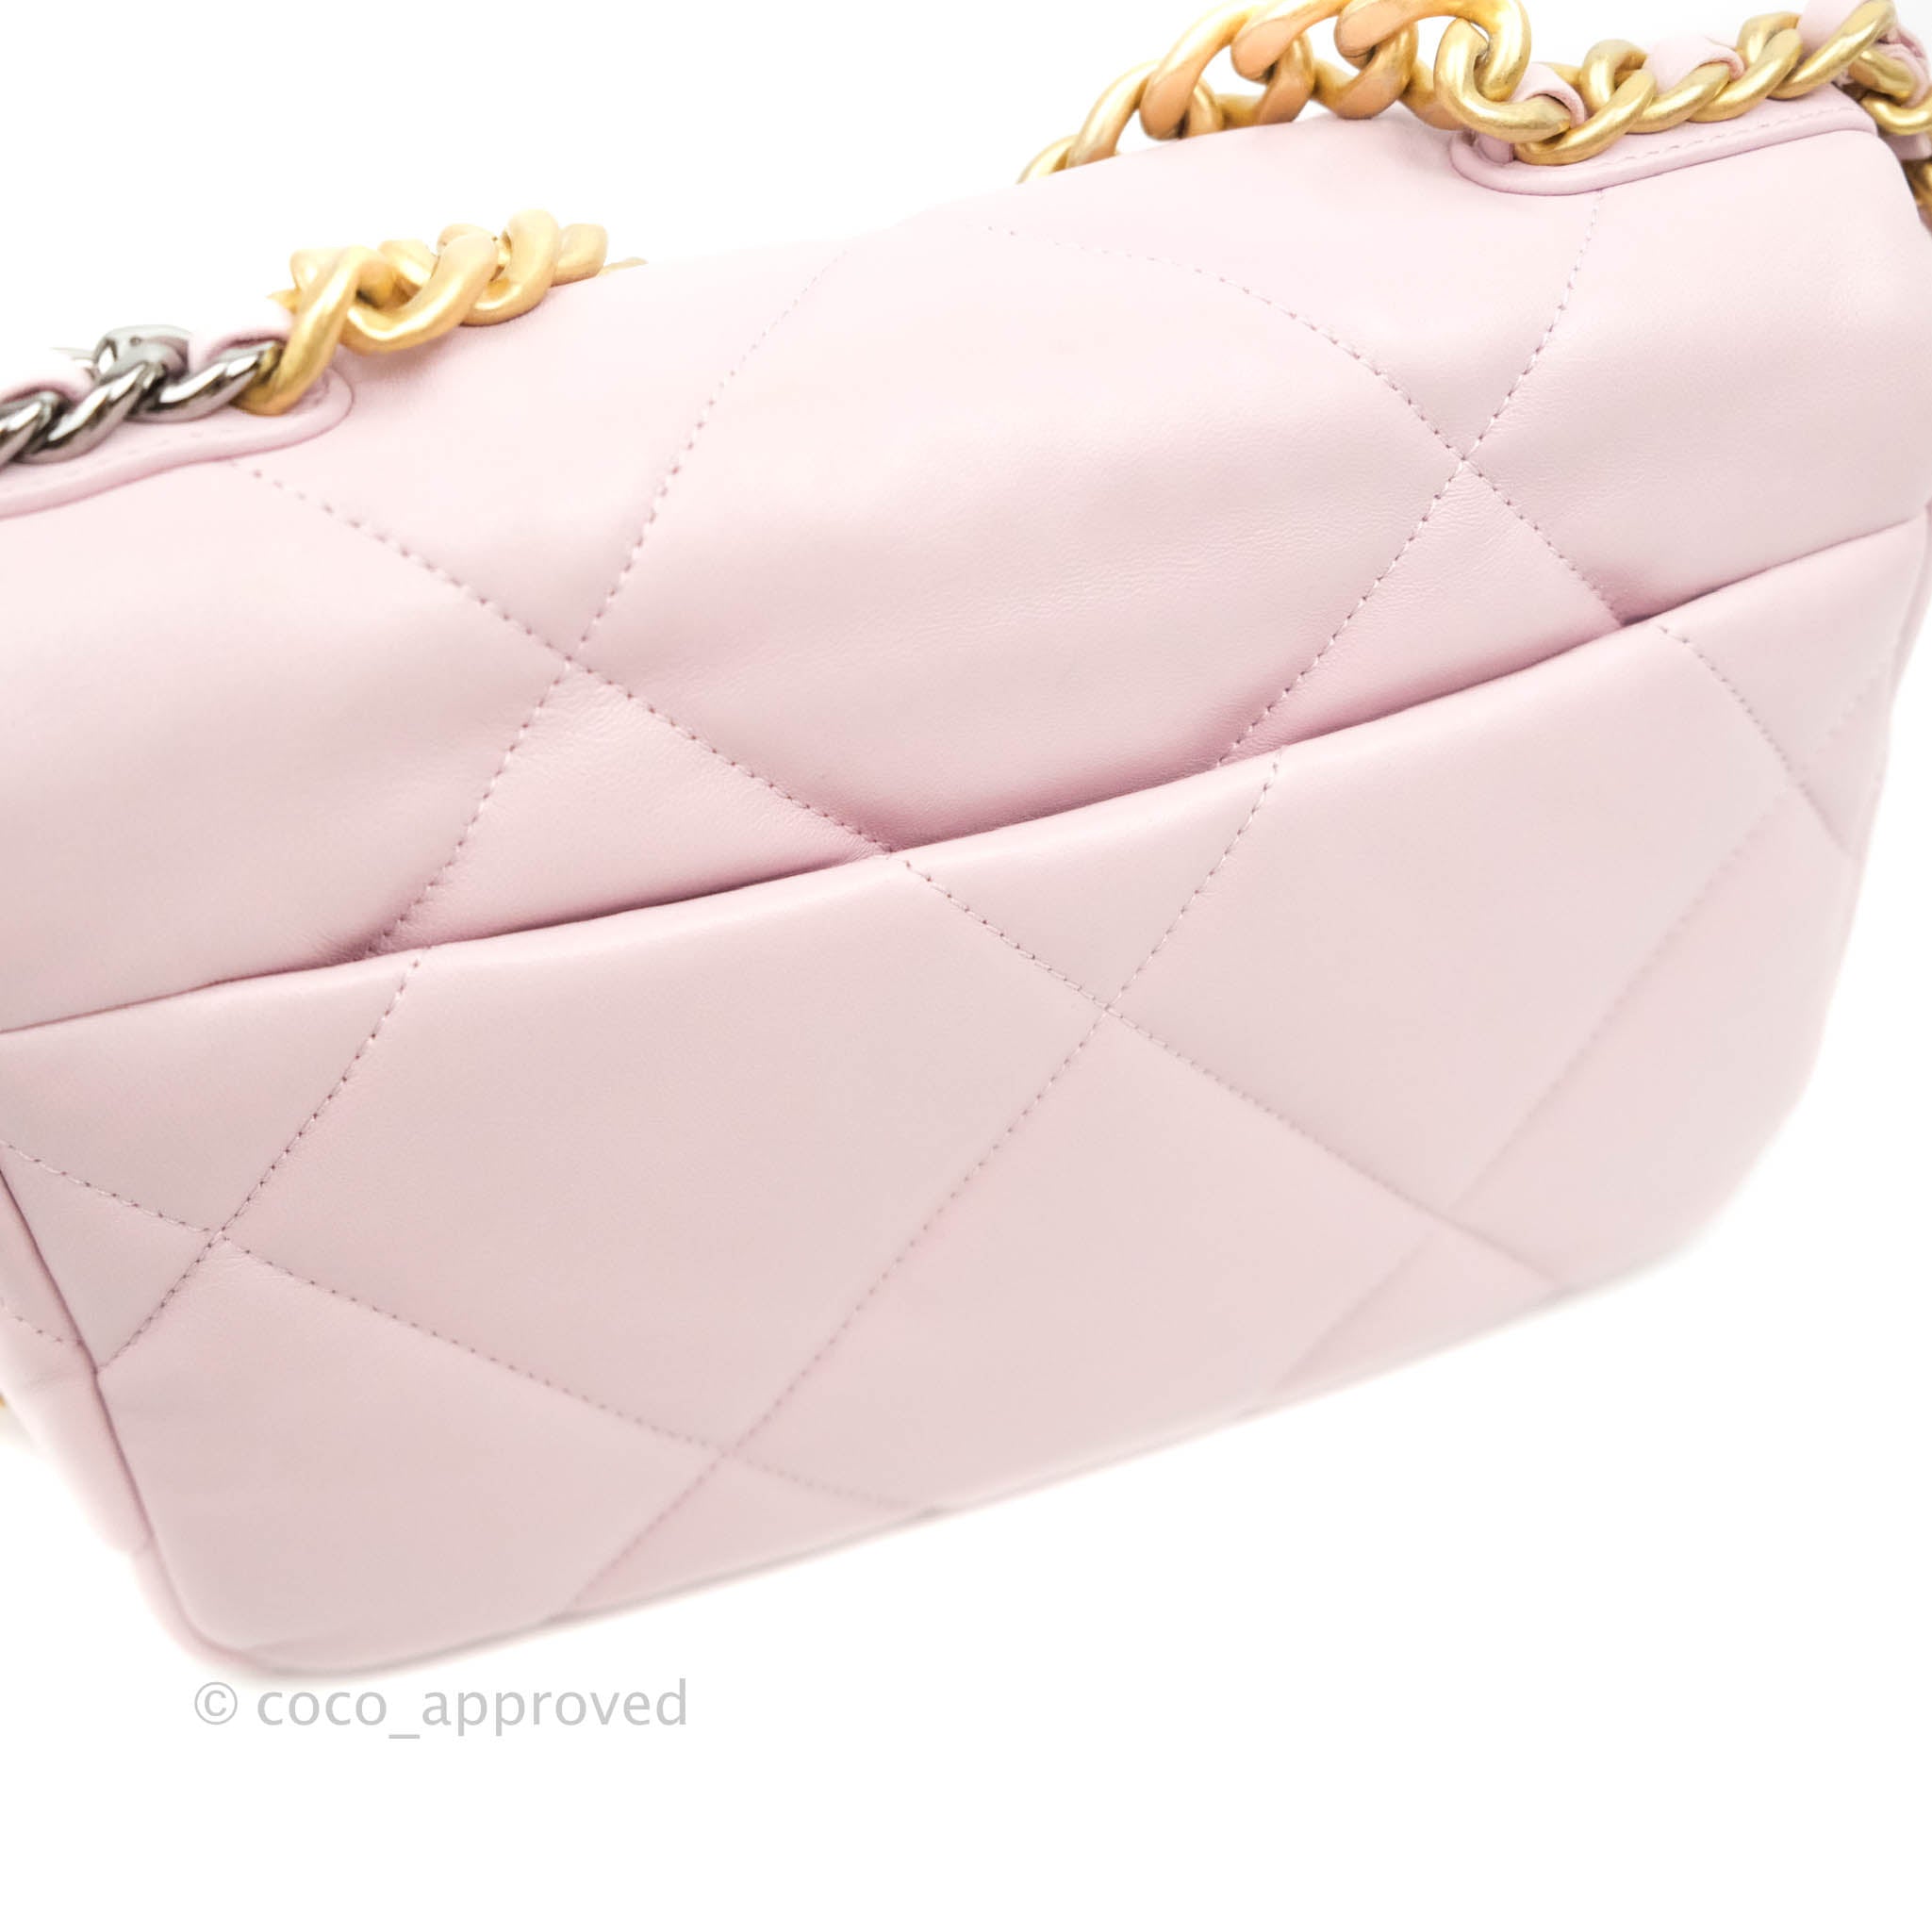 Chanel 22K Small 19 flap bag in pink lambskin